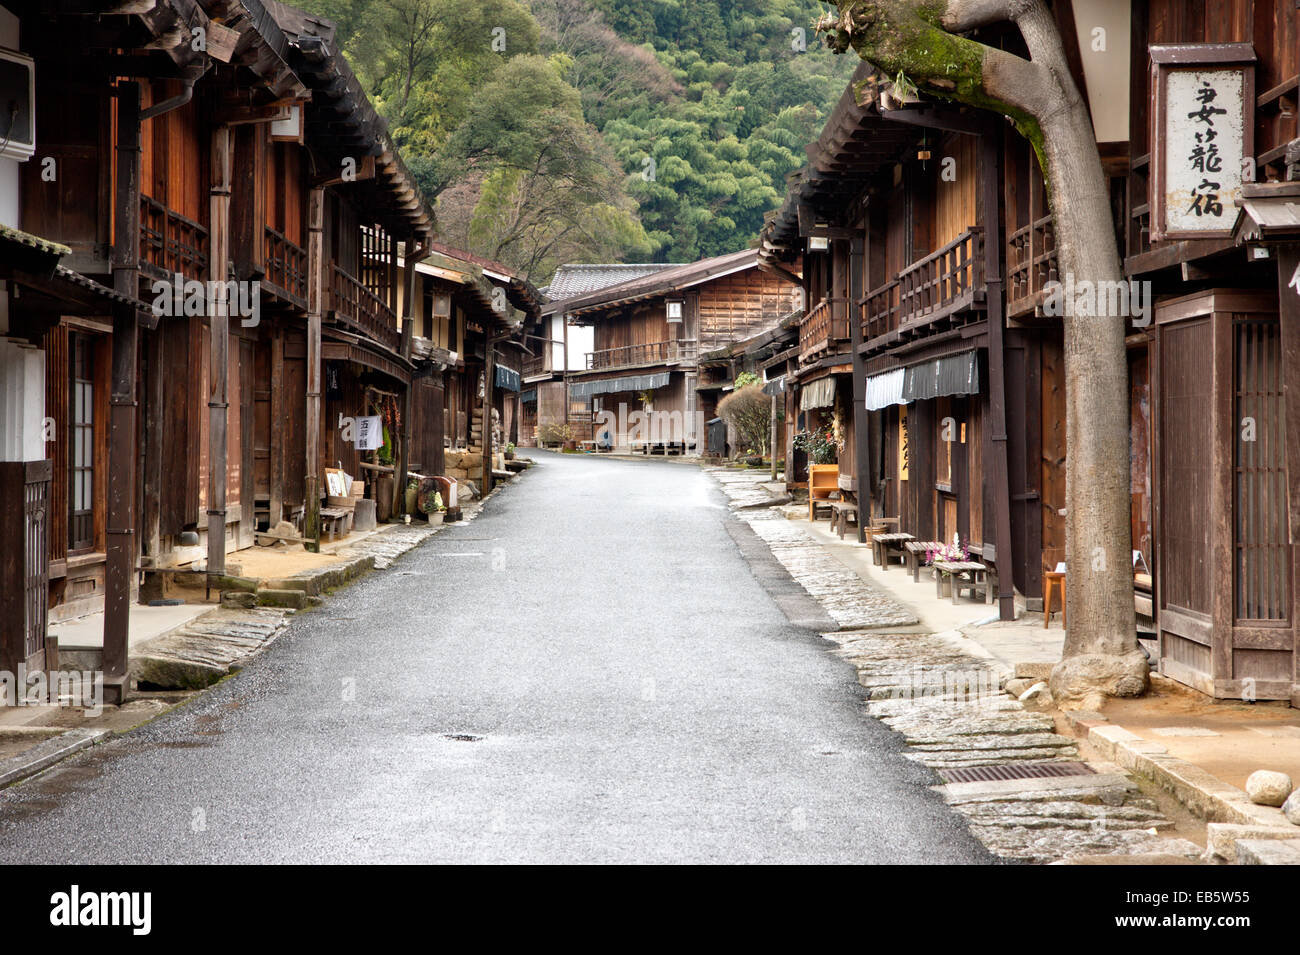 Terashita street in Tsumago, Japan, part of the Edo period Nakasendo Highway, with wooden buildings including ryokan, inns, minshuku and shops. Stock Photo